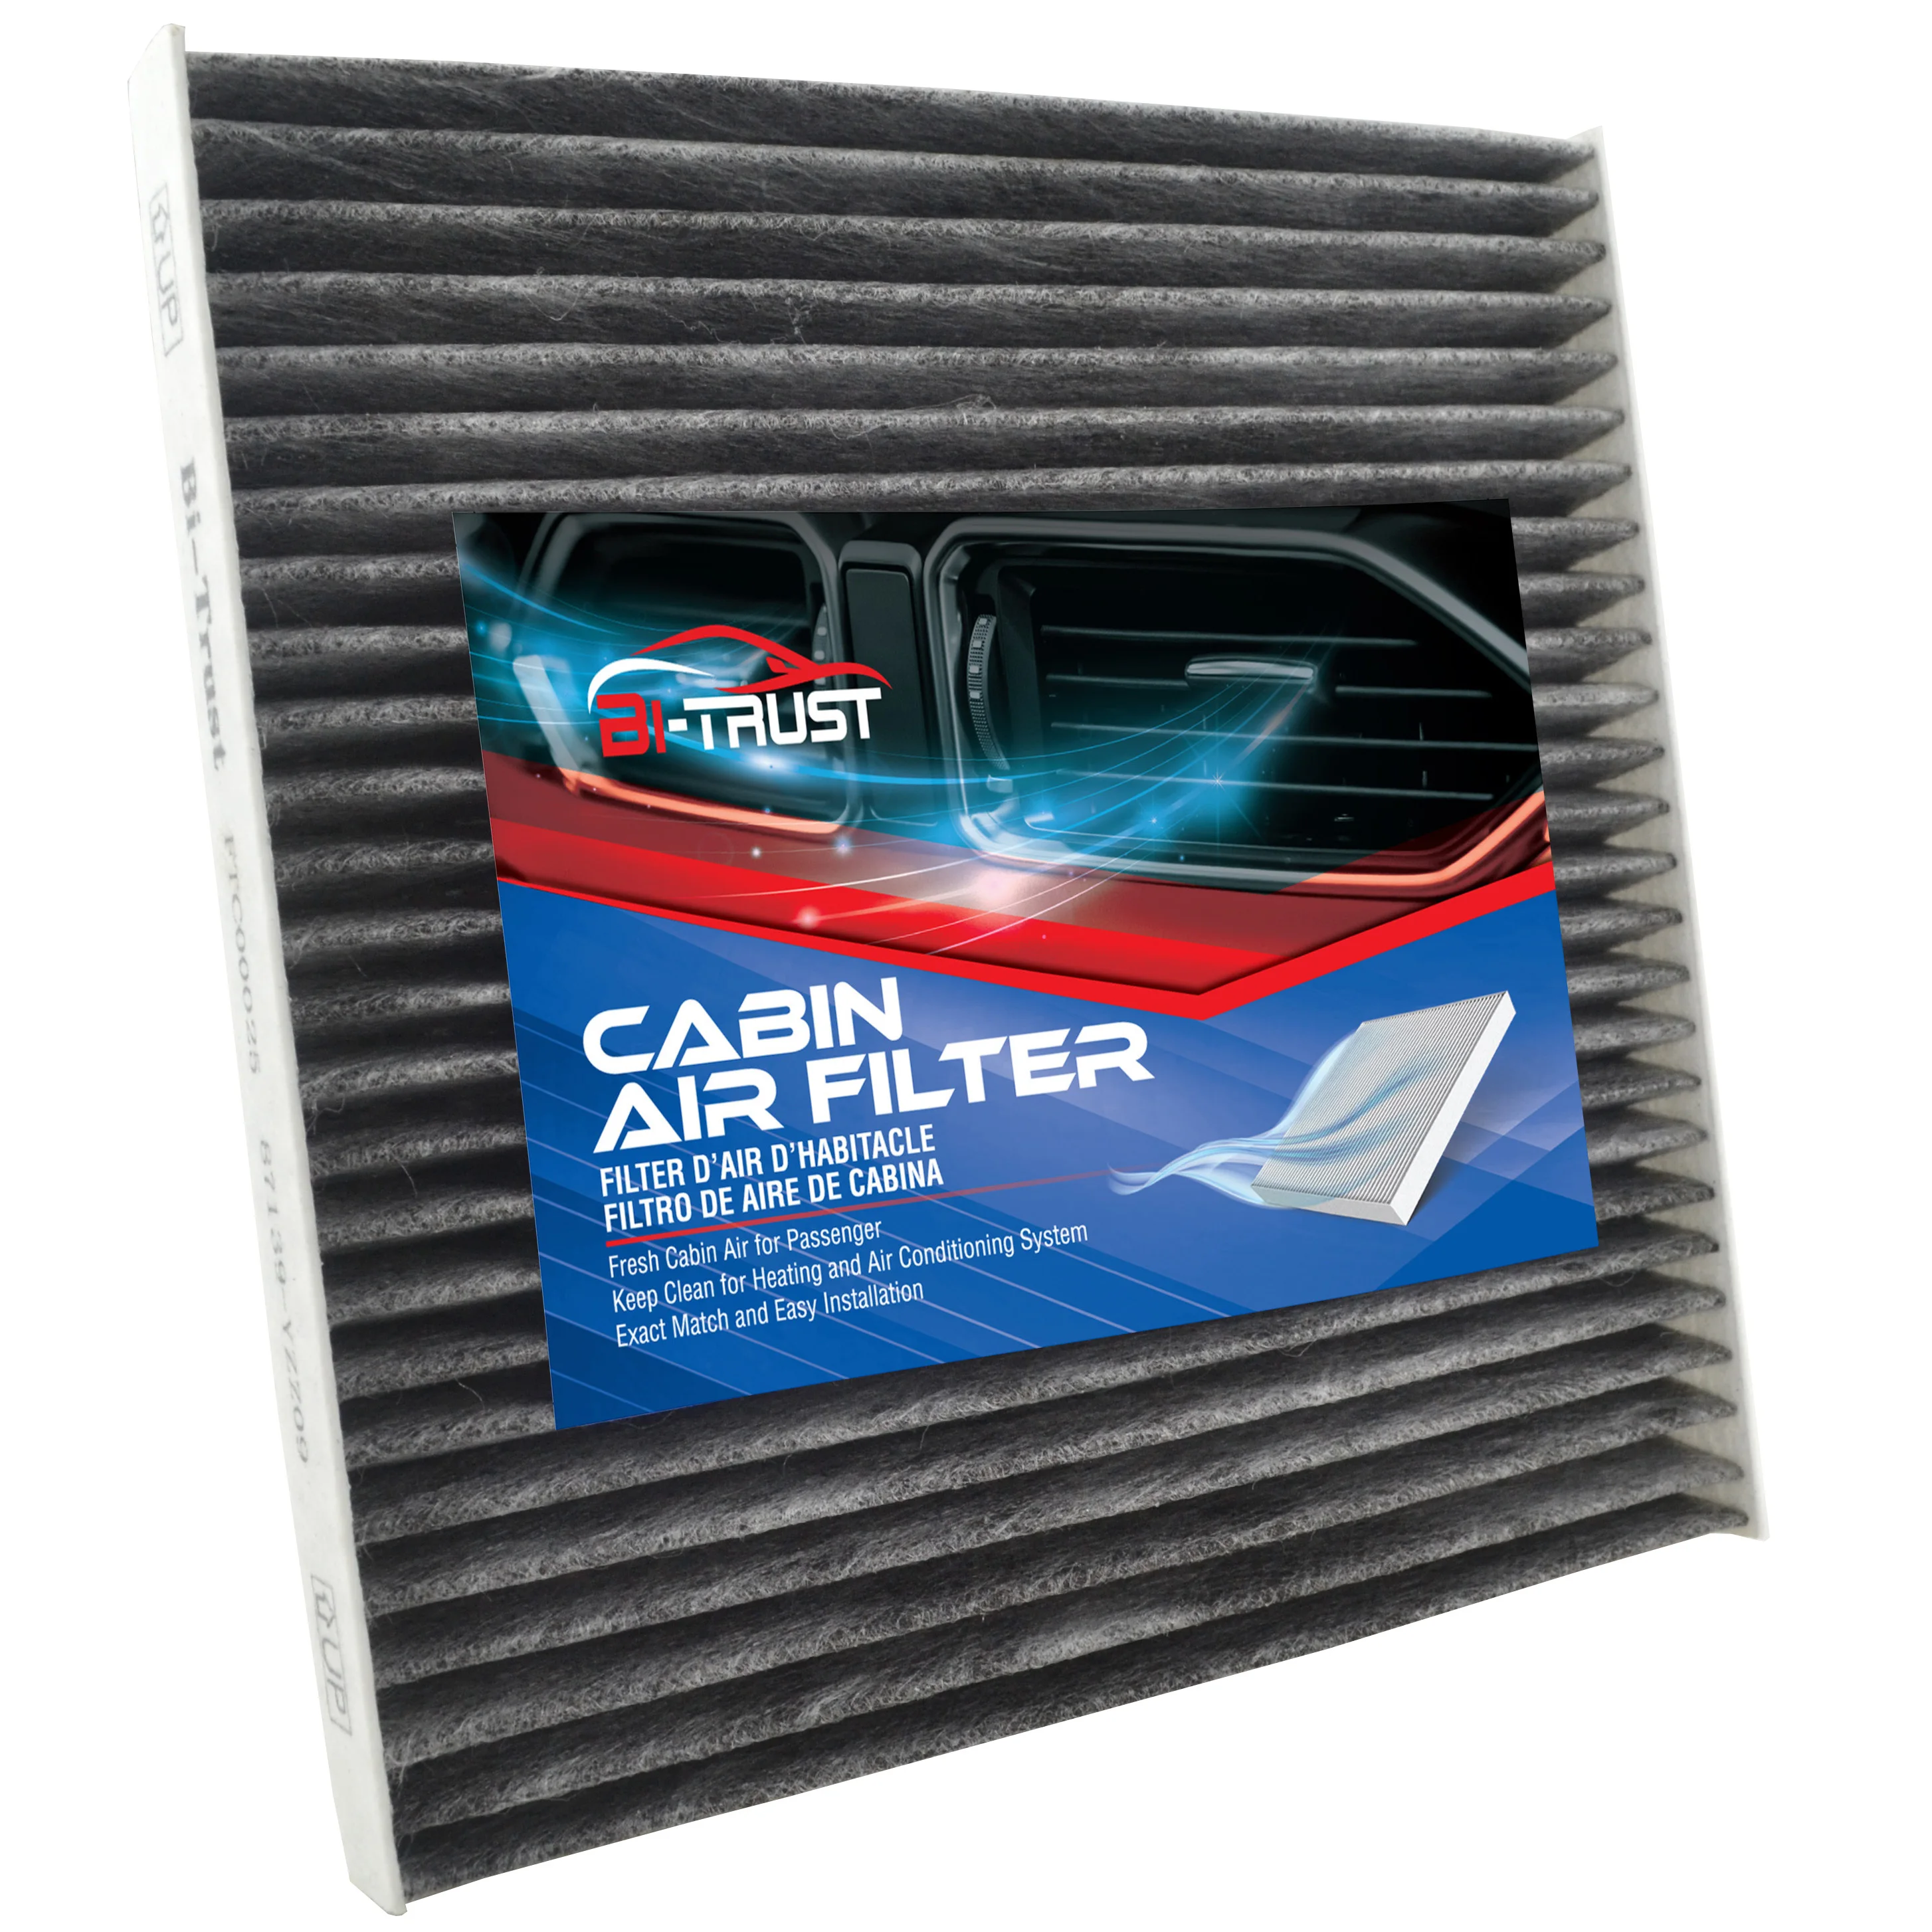 

Bi-Trust Cabin Air Filter Replacement for Toyota Tacoma/Pontiac Vibe/Dodge Dart CF10374,87139-YZZ09,88508-04010